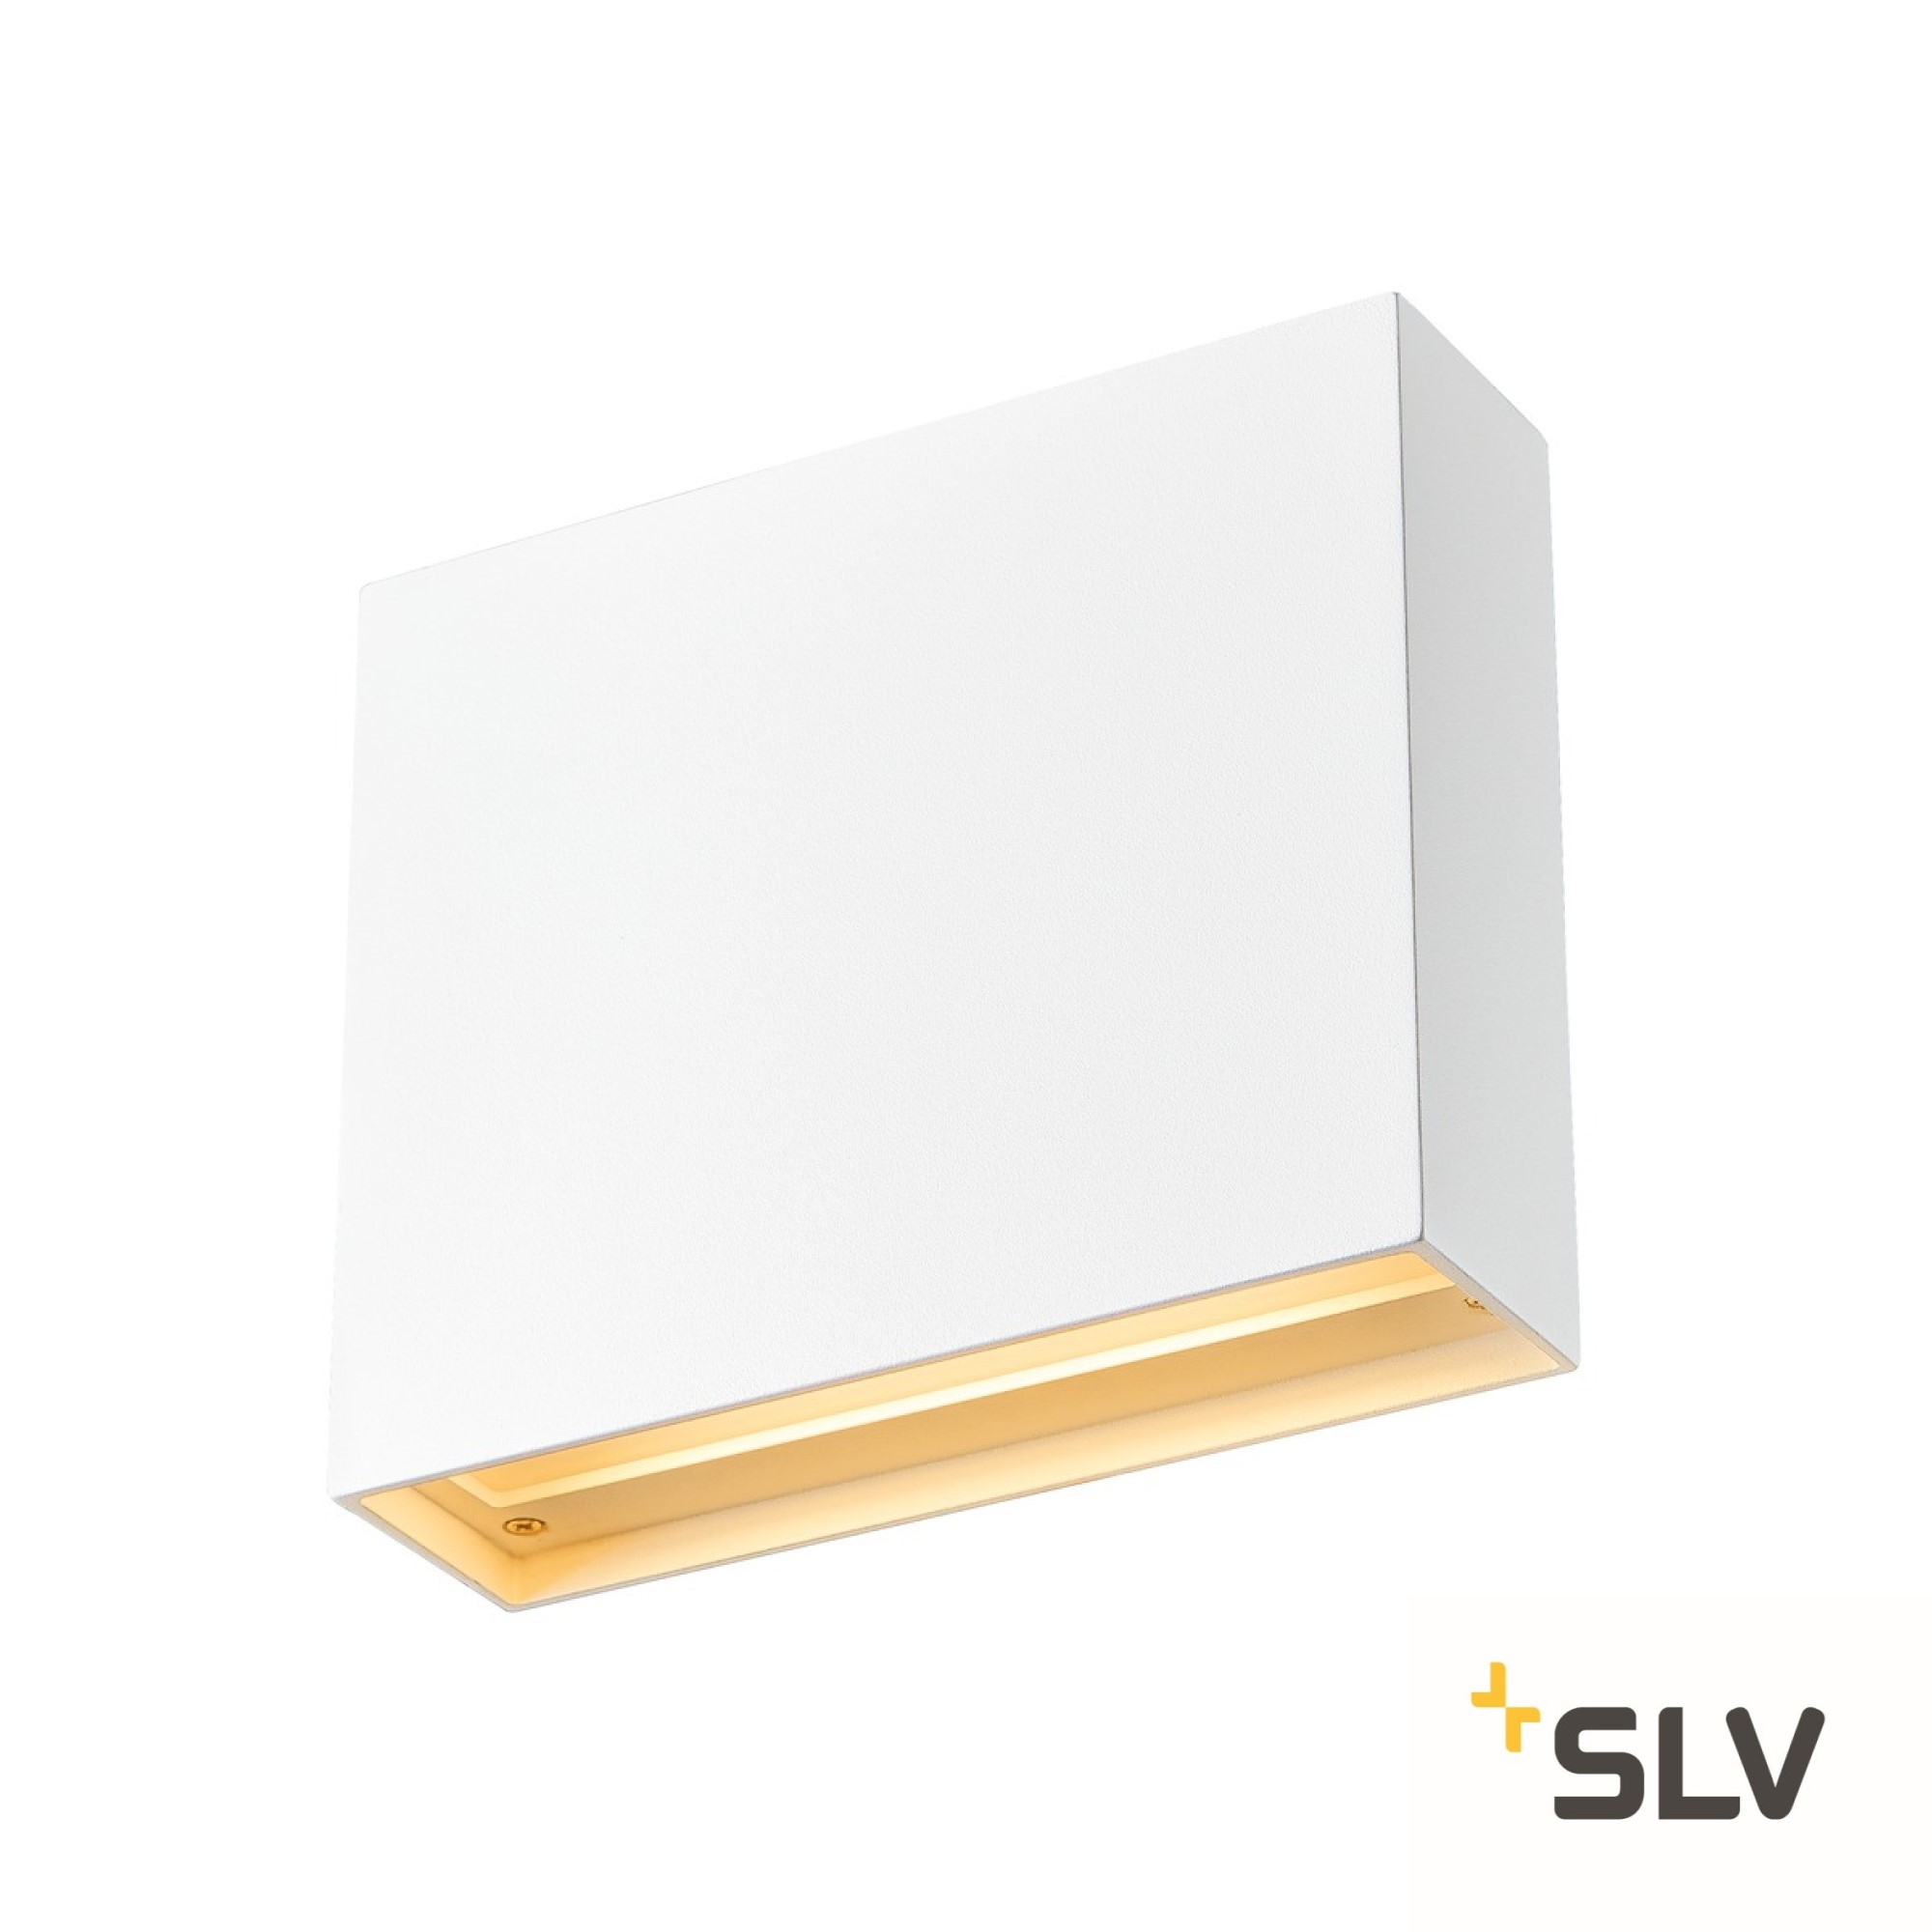 SLV QUAD FRAME 19 LED Wall Light 2700/3000K white TRIAC-dimmable 640lm